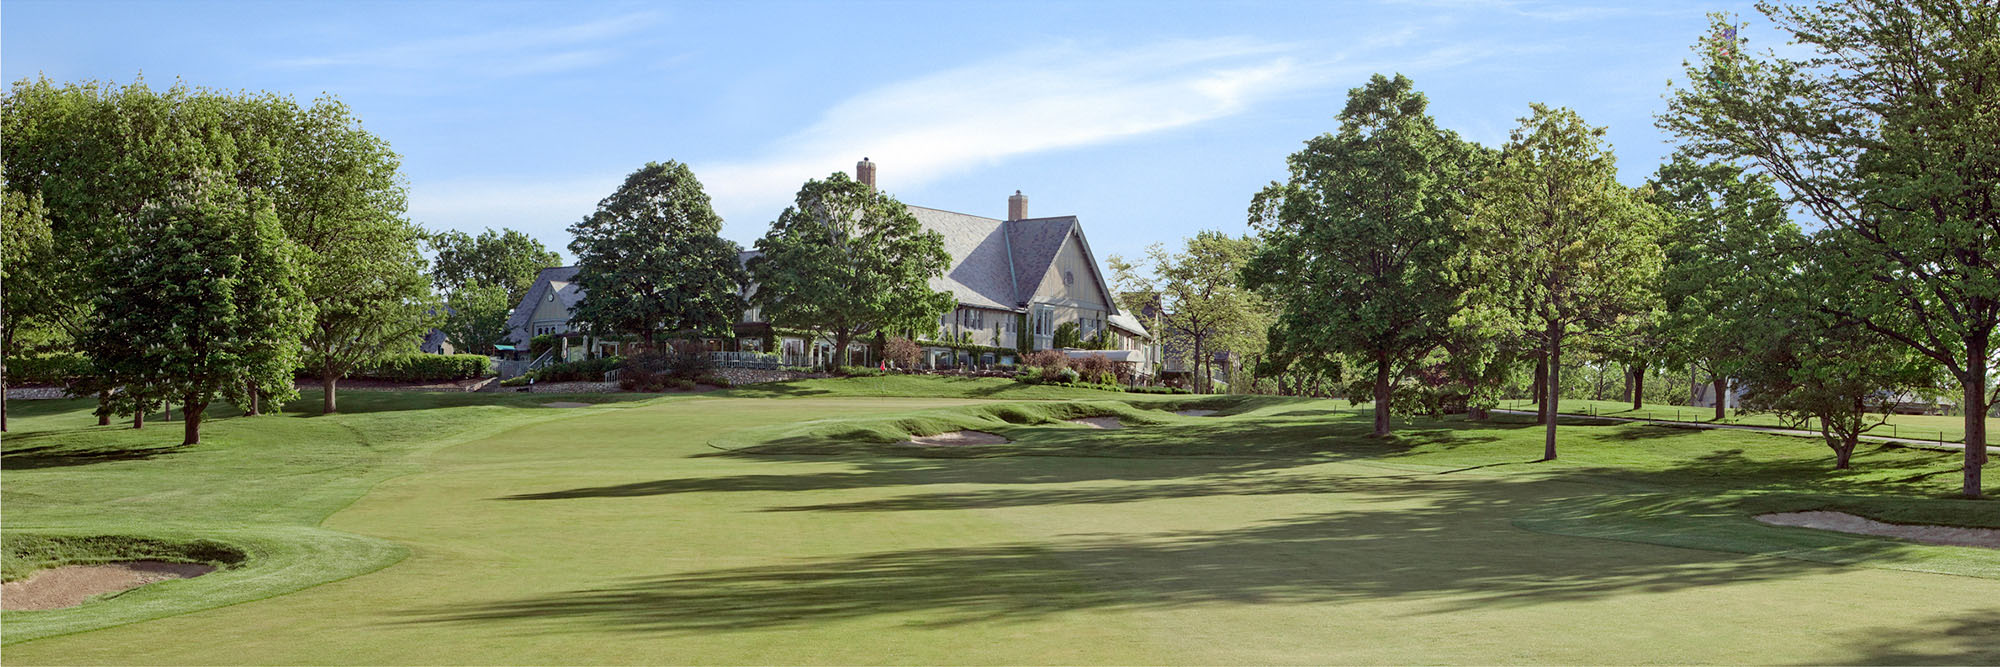 Golf Course Image - Glen View Club No. 18